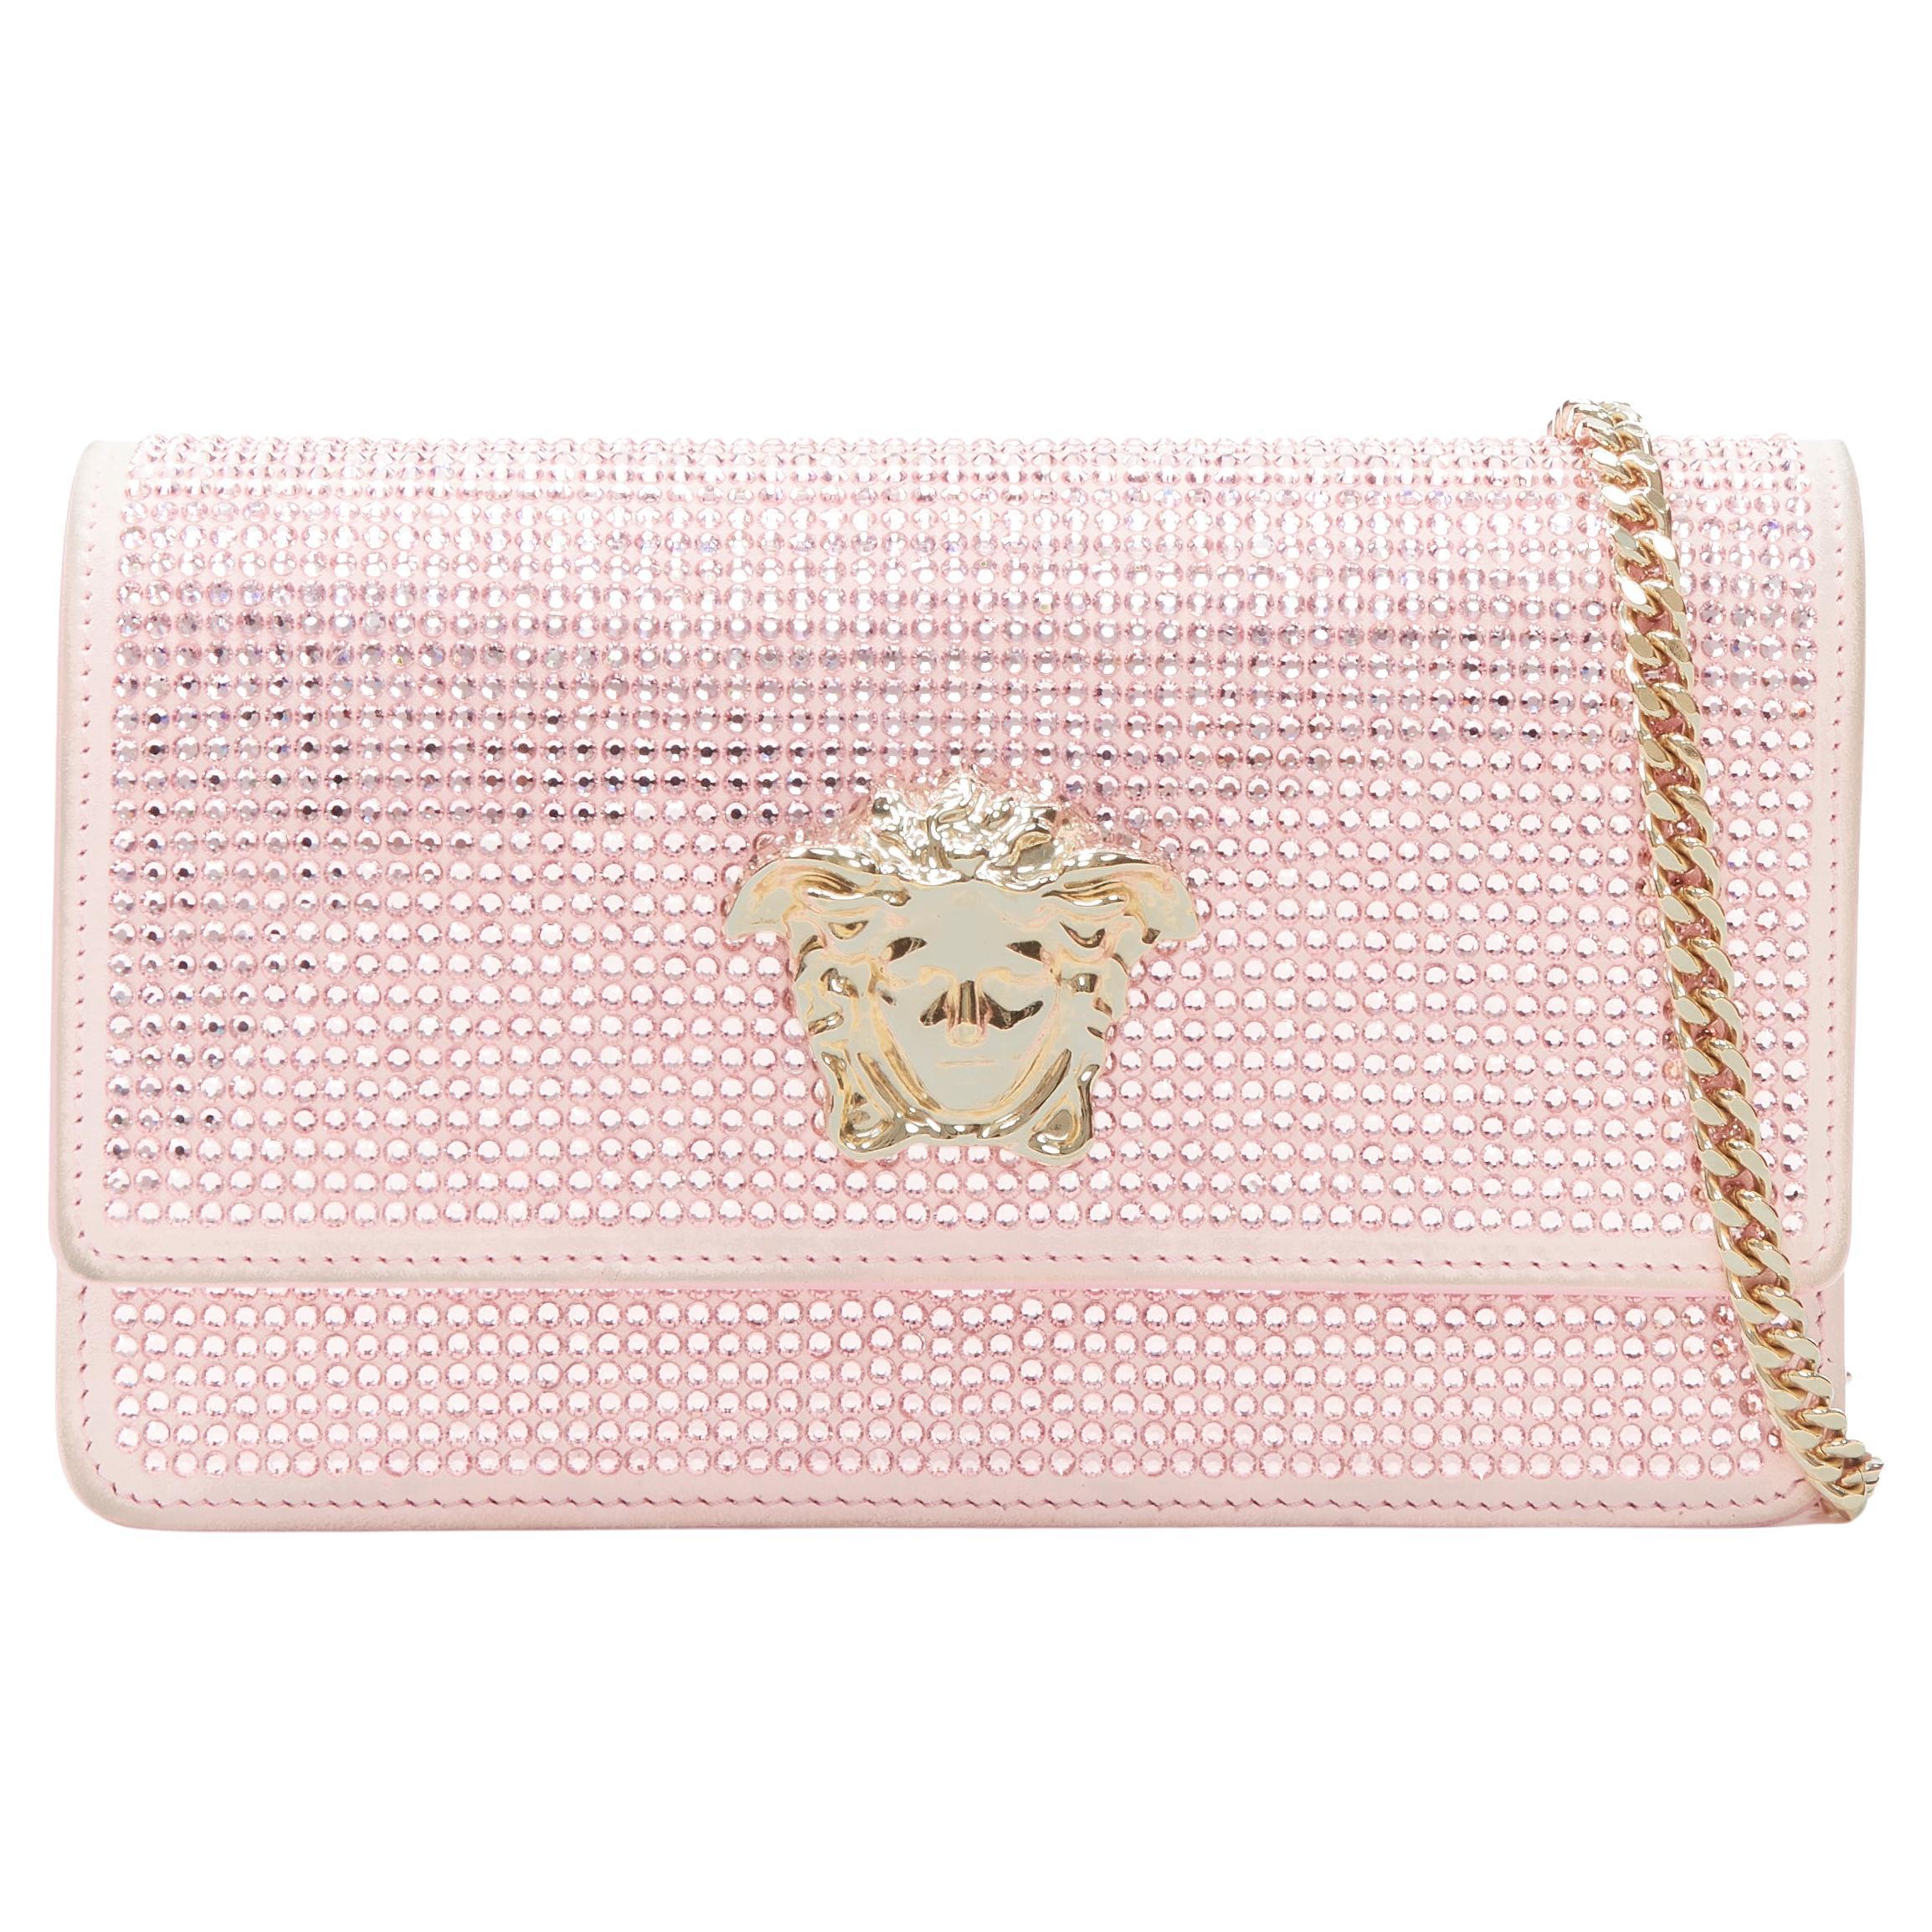 VERSACE Medusa Palazzo gold emblem pink strass crystal embellished crossbody bag